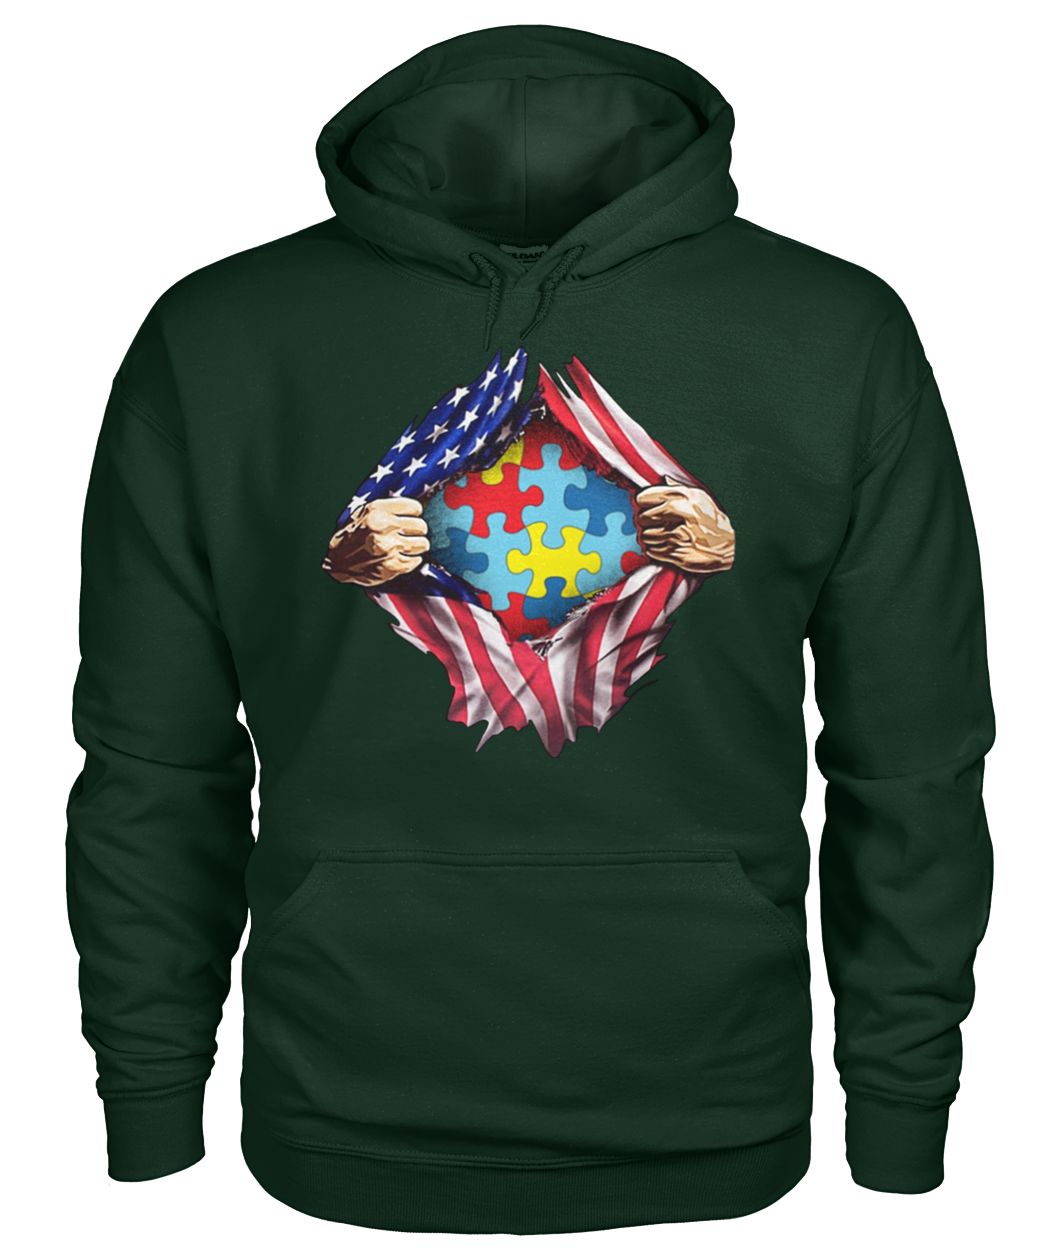 Autism awareness inside USA flag gildan hoodie